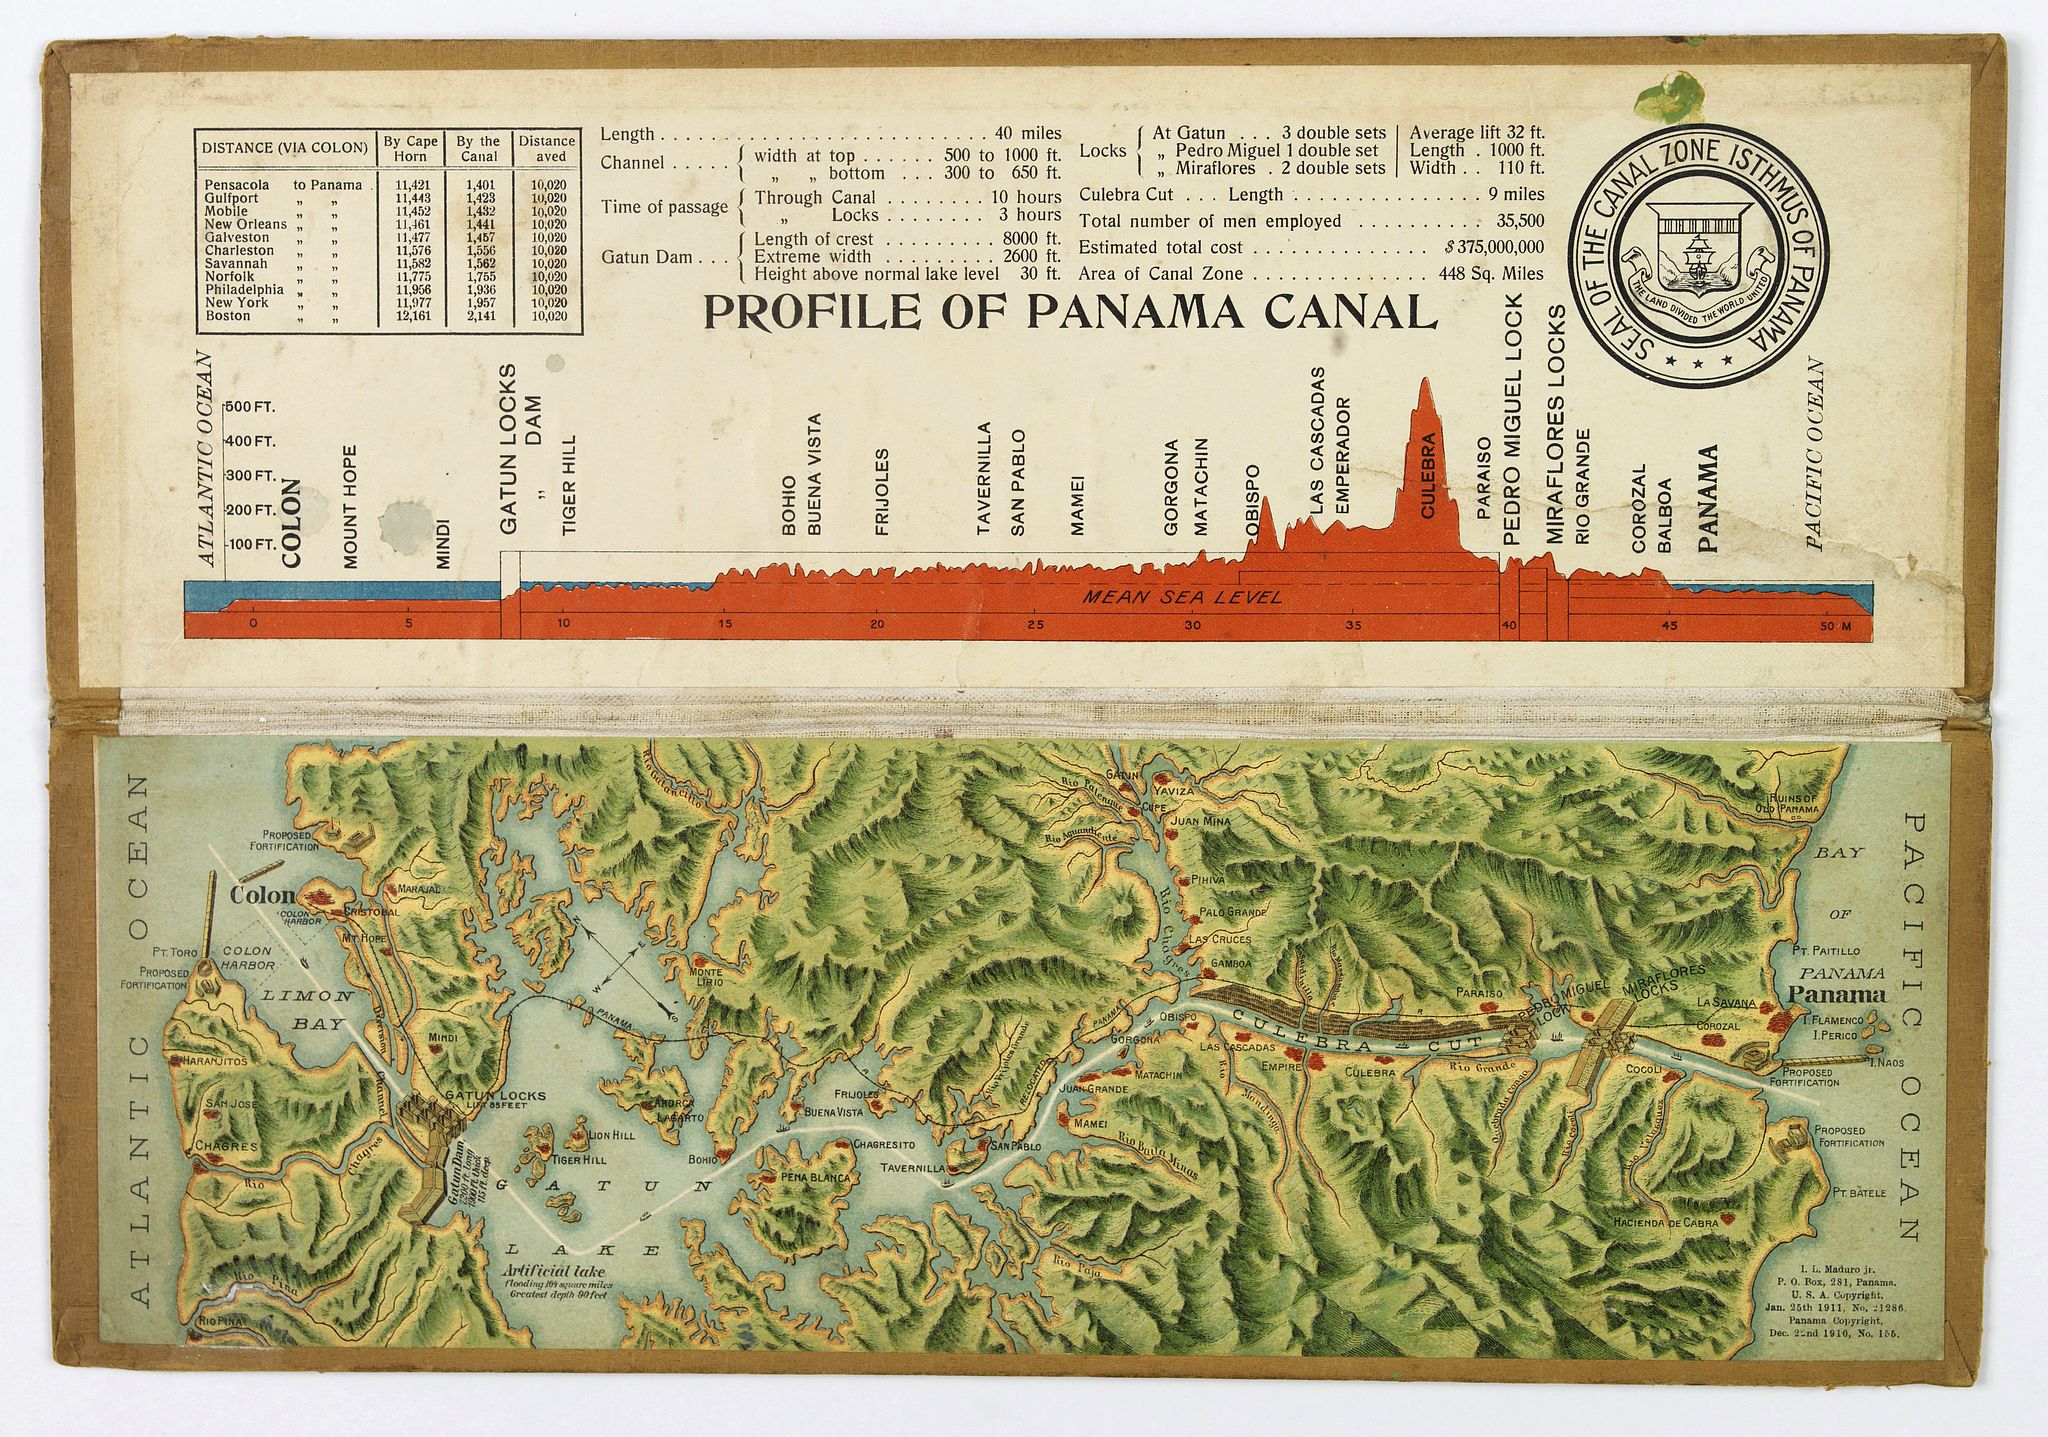 Souvenir Model of the Panama Canal